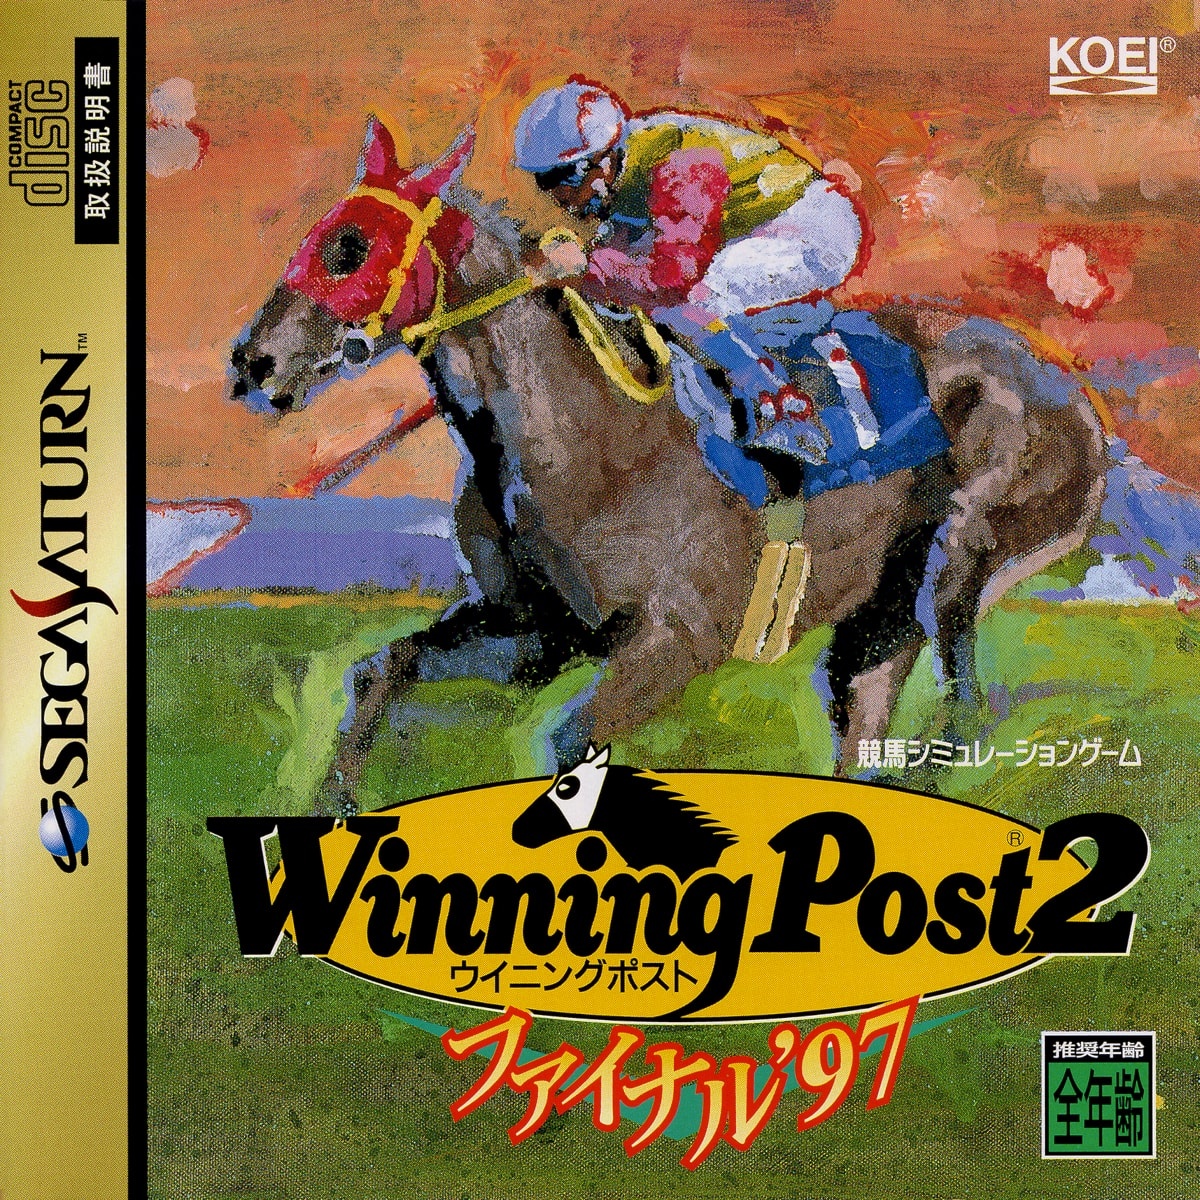 Winning Post 2 Final 97 cover